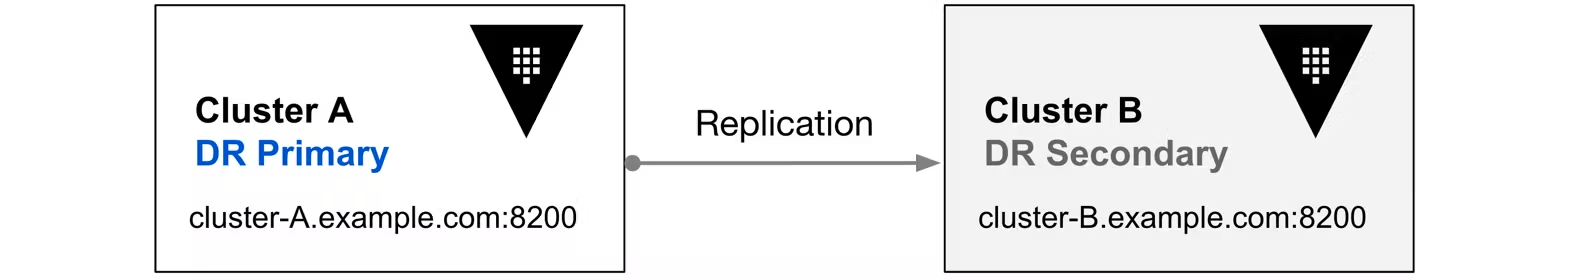 DR Replication Diagram